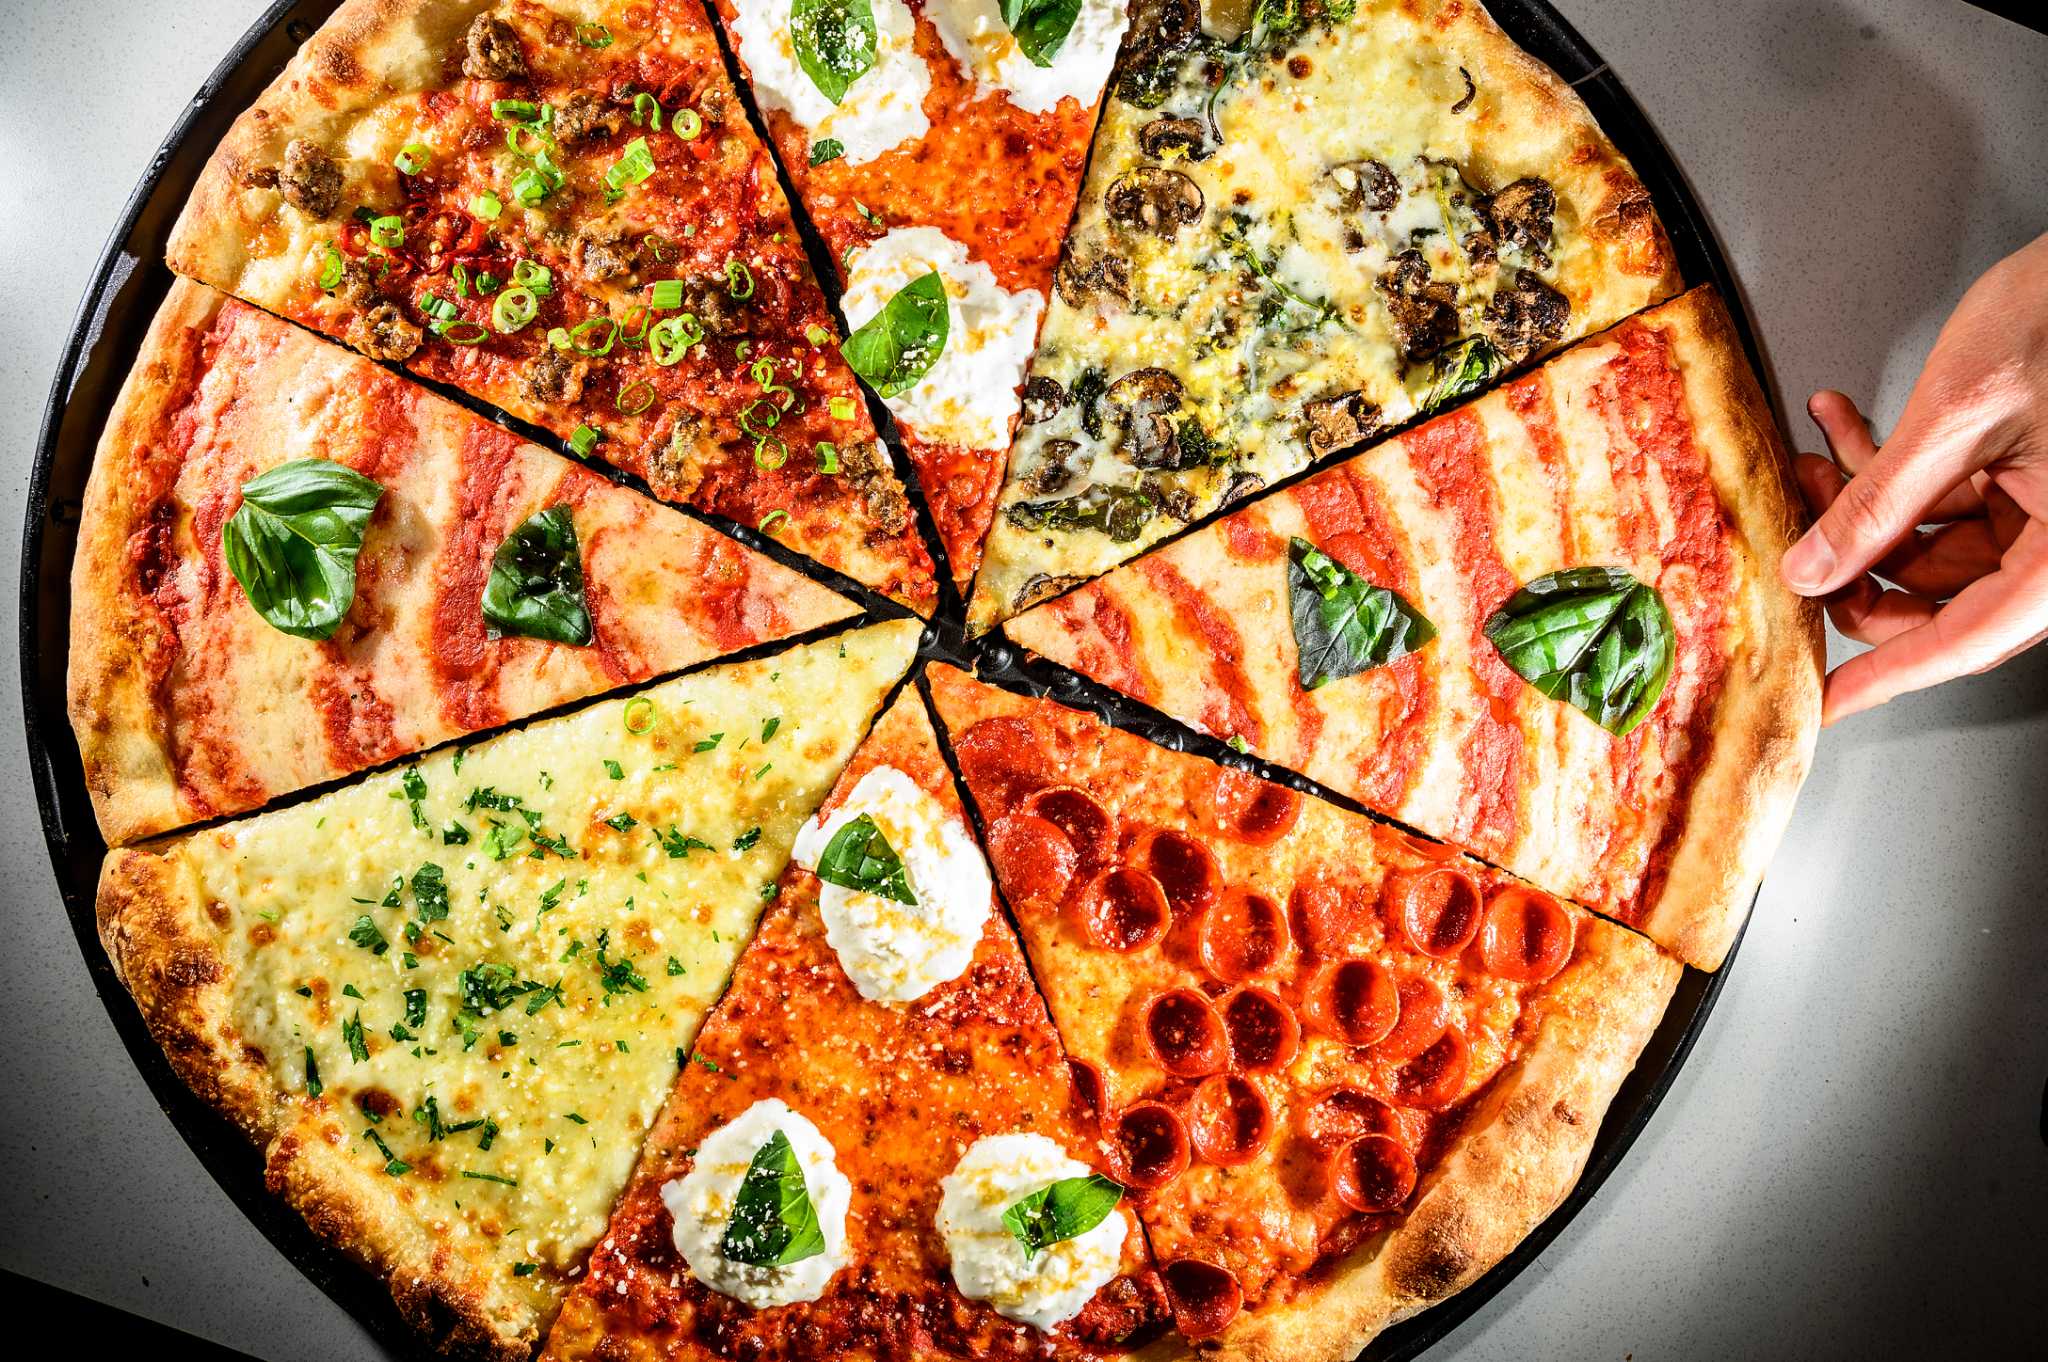 Mama's Boy shines with NY-style pizza slices